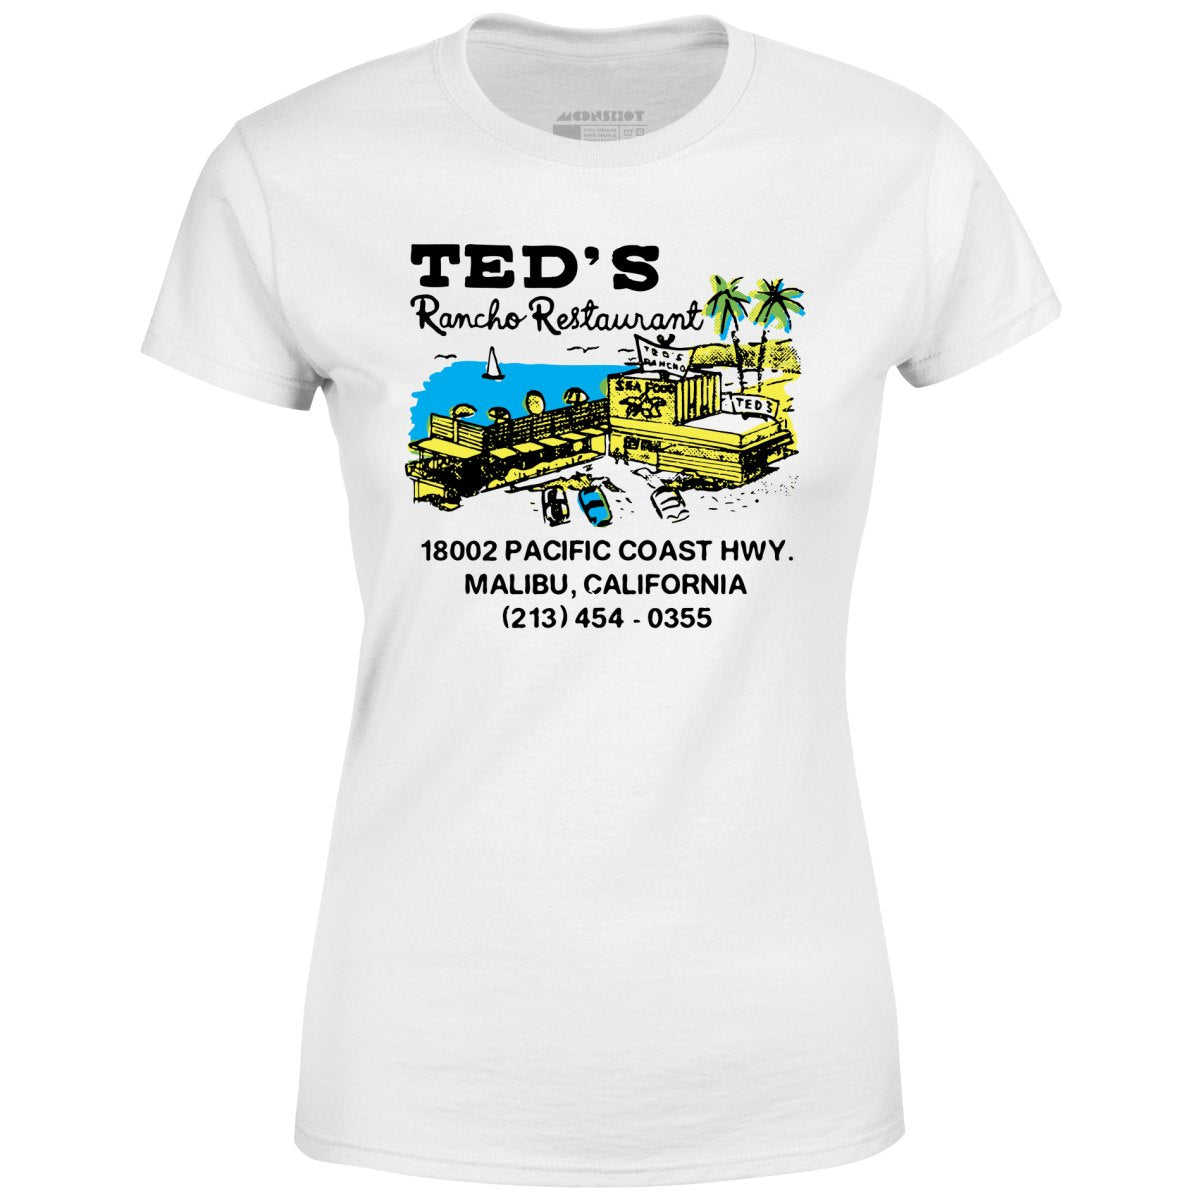 Ted's Rancho Restaurant - Malibu, CA - Vintage Restaurant - Women's T-Shirt